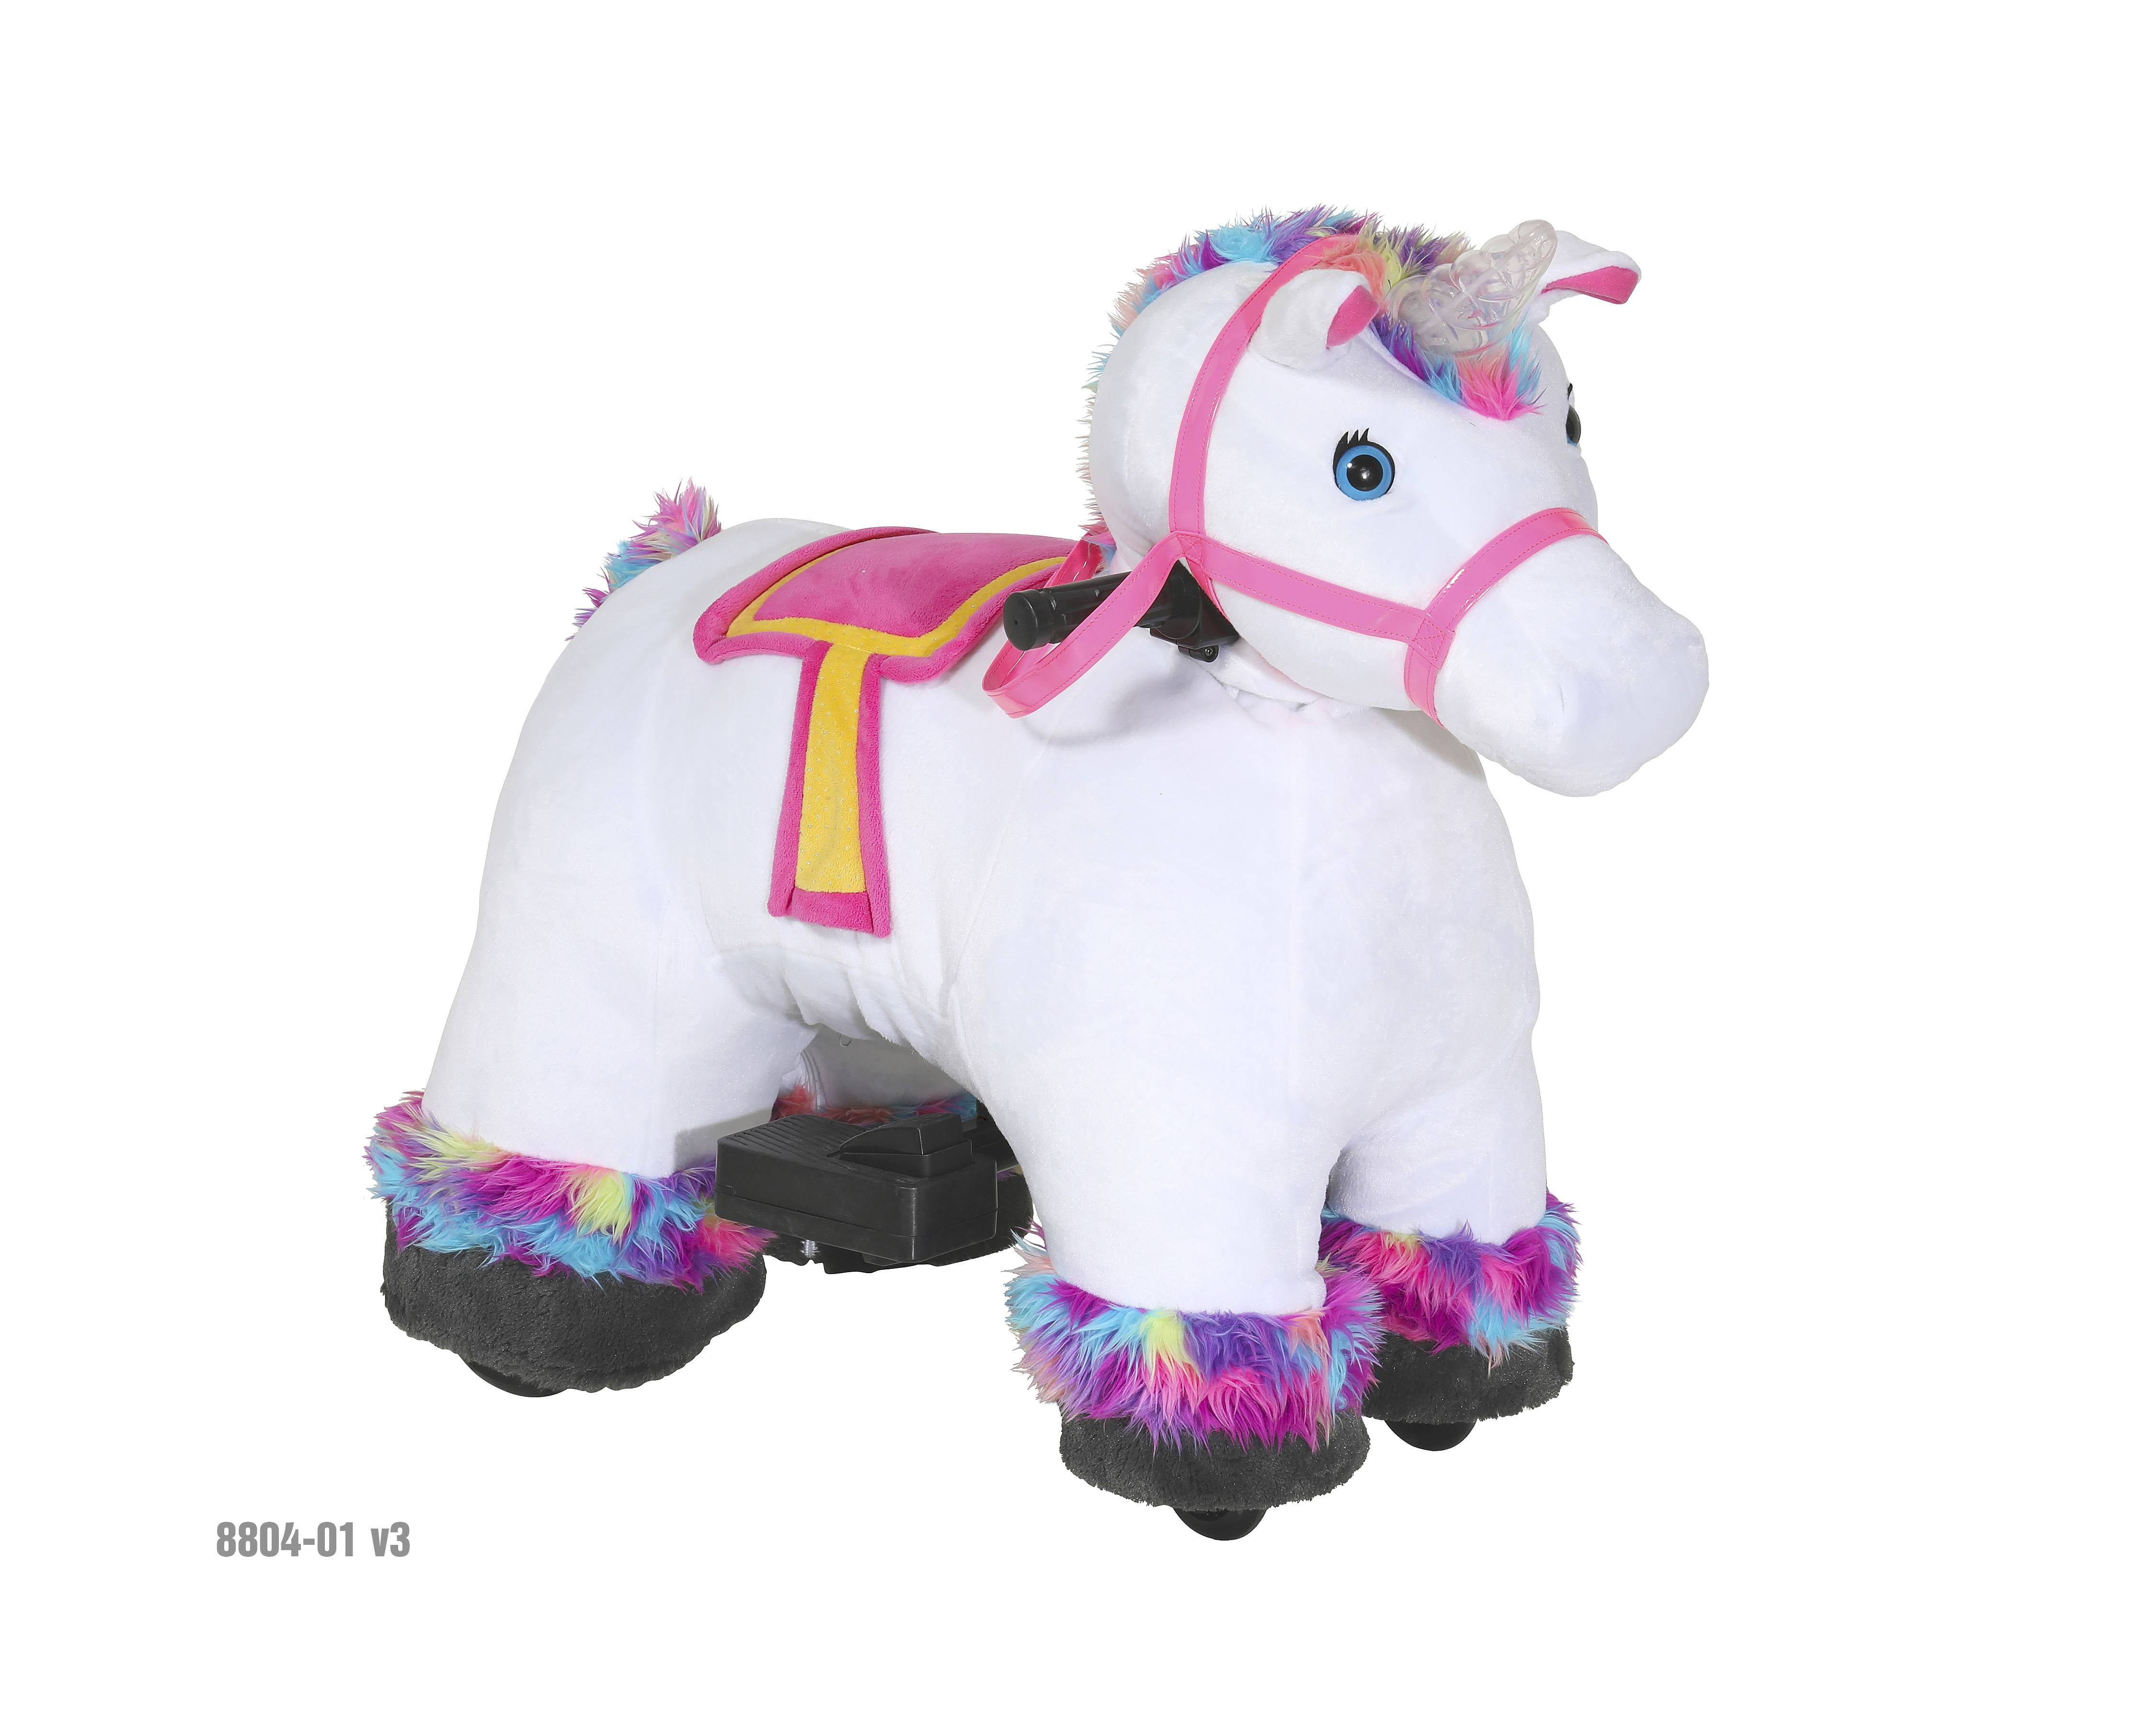 unicorn sit on toy